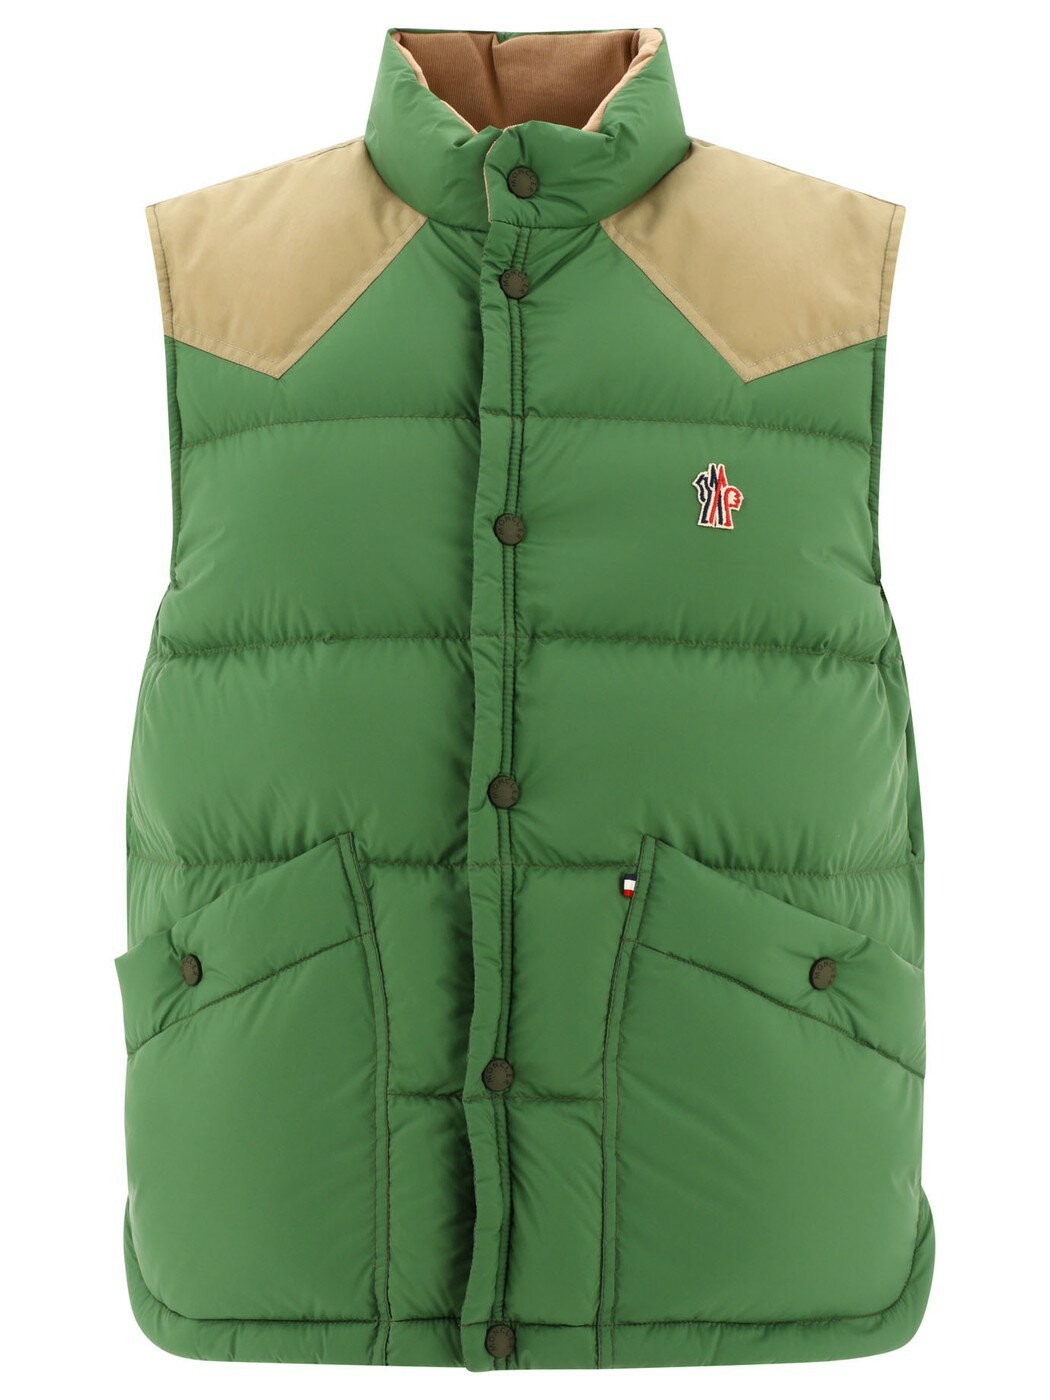 MONCLER GRENOBLE モンクレール グルーノーブス グリーン Green "Veny" vest jacket ジャケット メンズ..